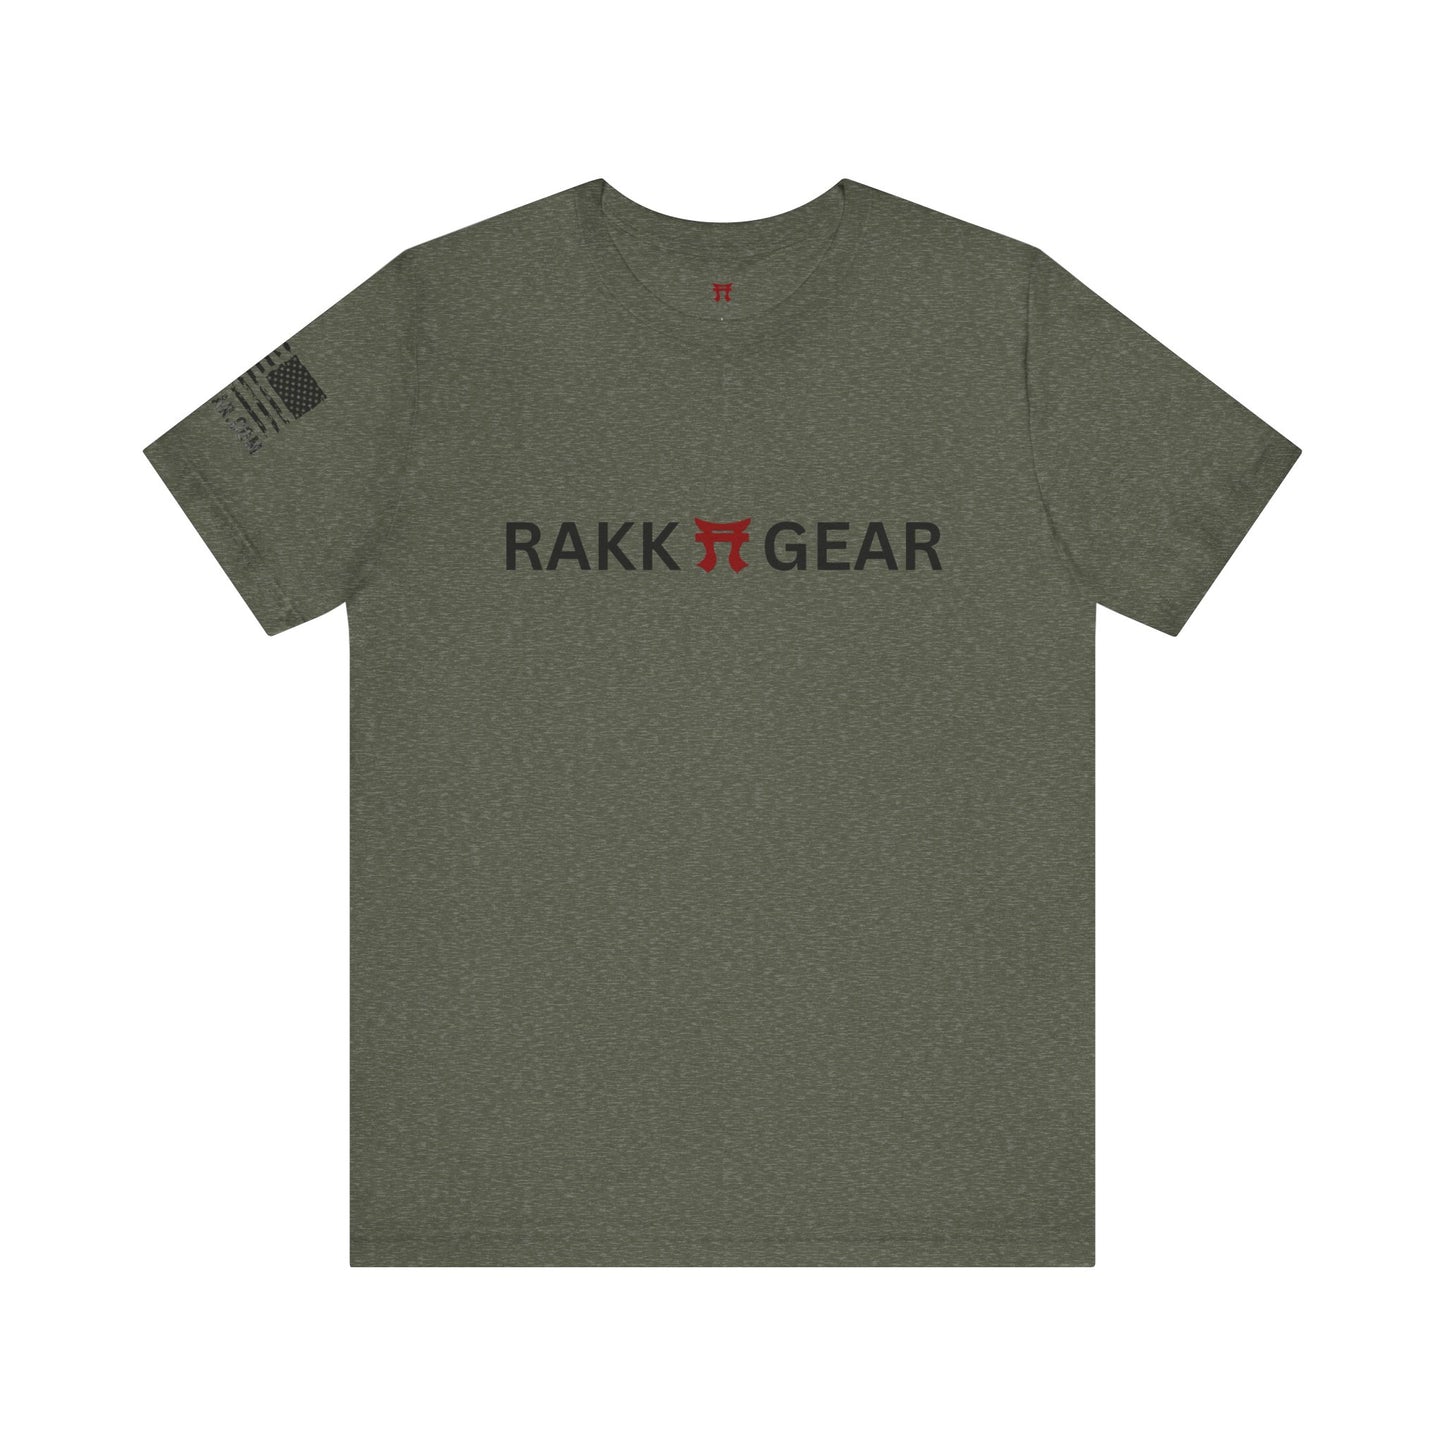 Rakkgear Logo Short Sleeve Tee in military green